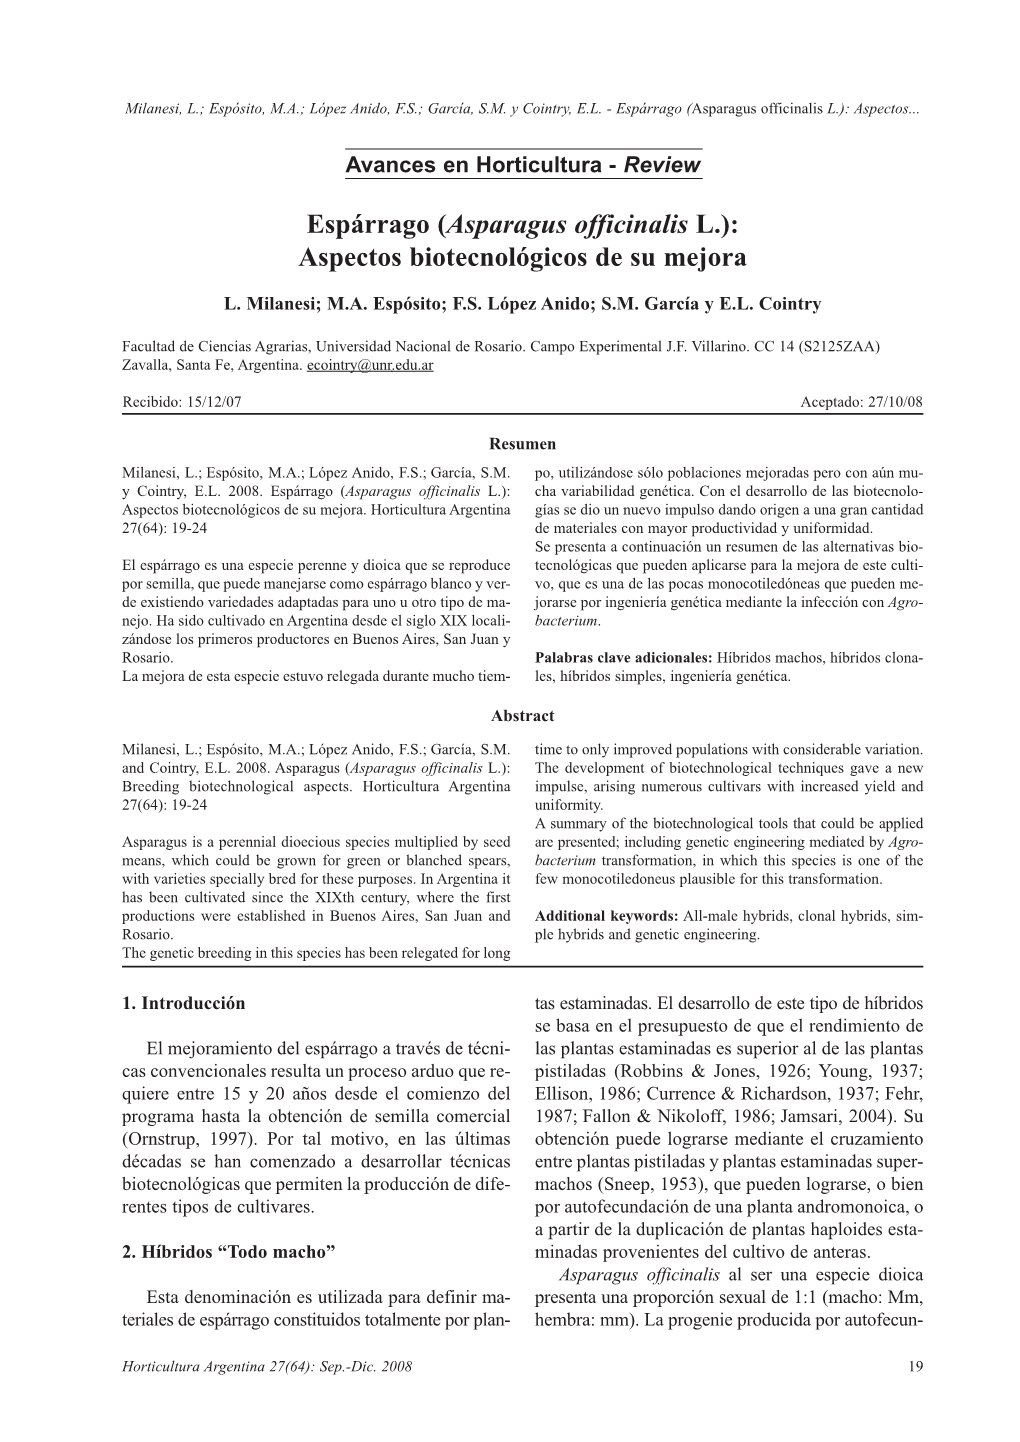 Asparagus Officinalis L.): Aspectos